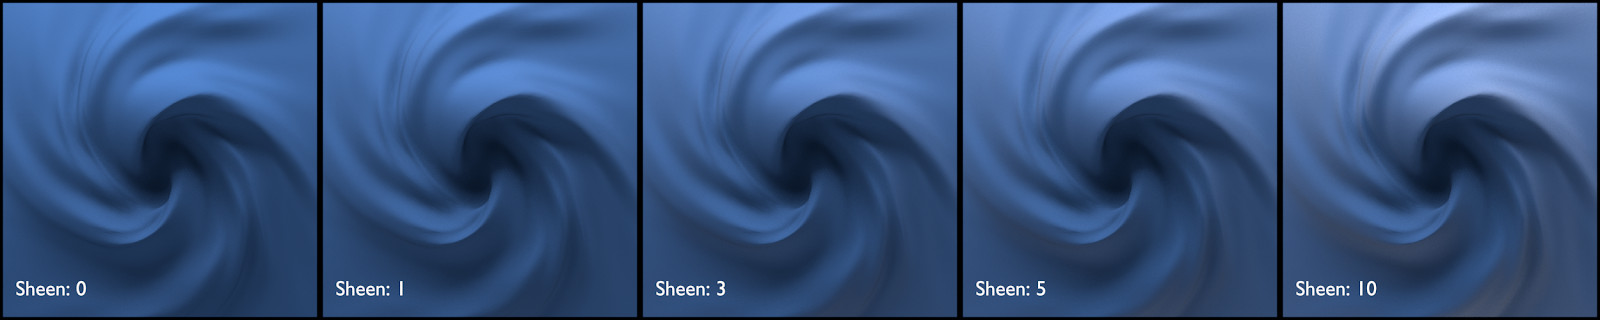 encyclopedia sheen